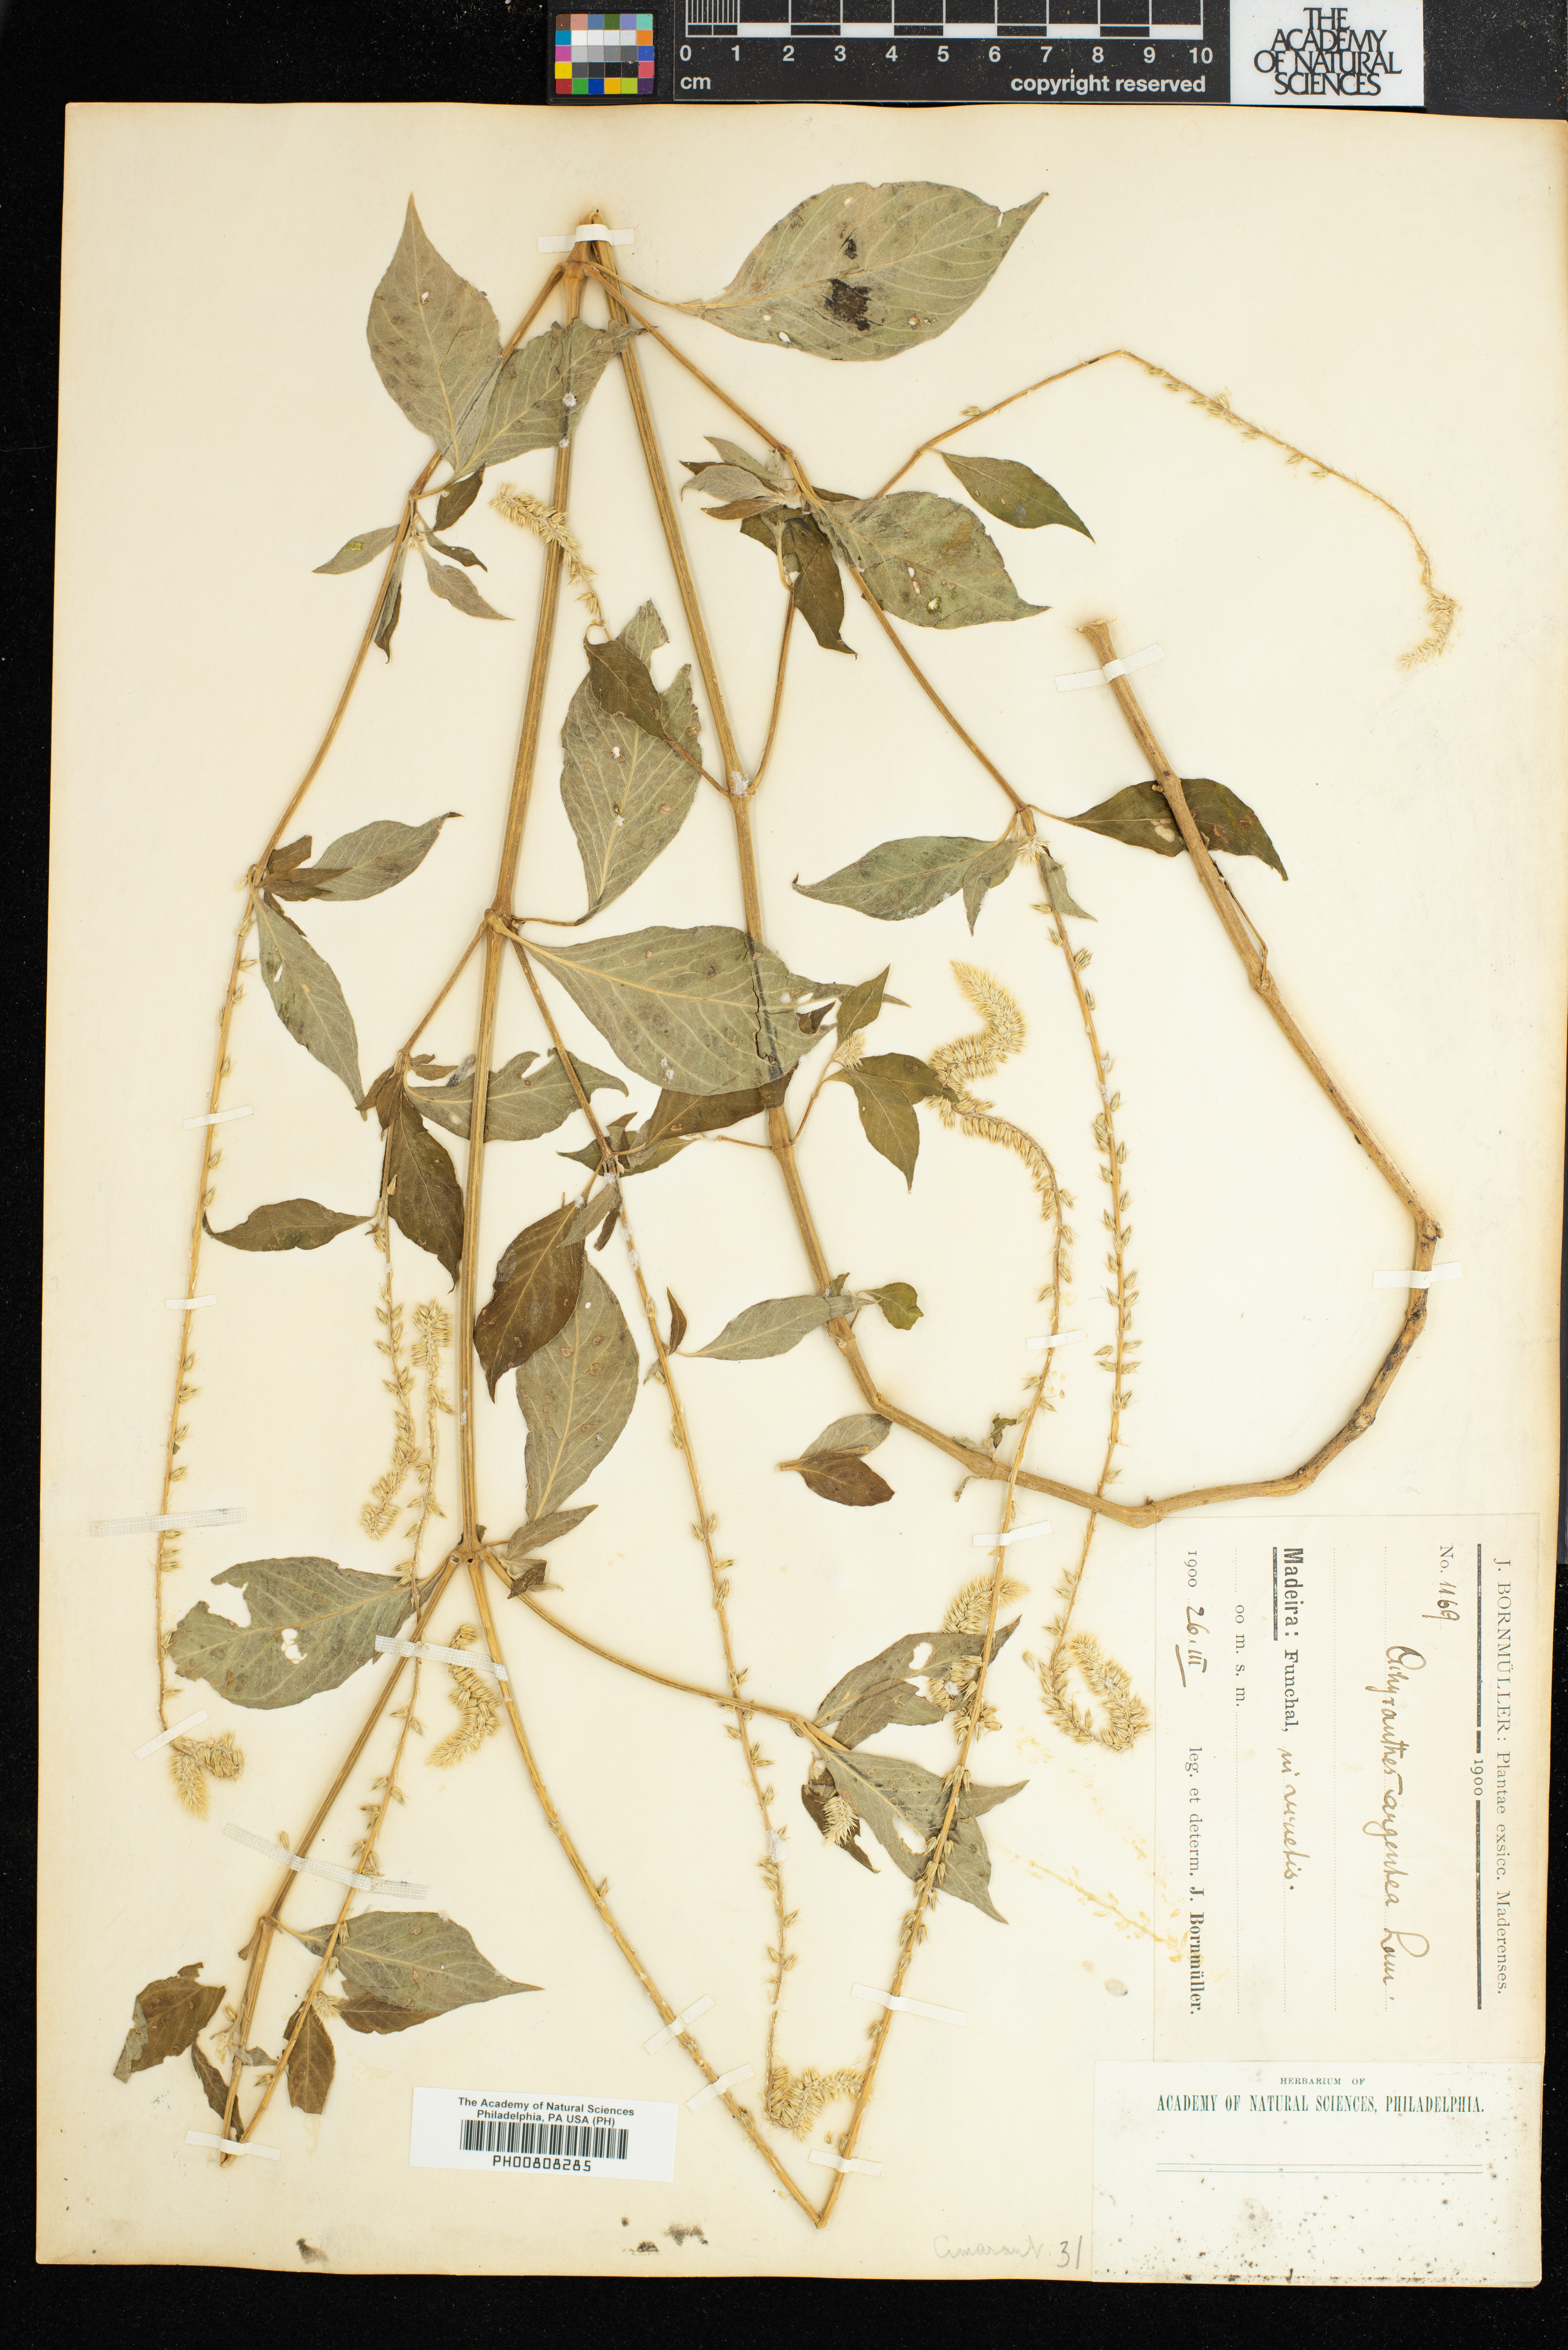 Achyranthes sicula image